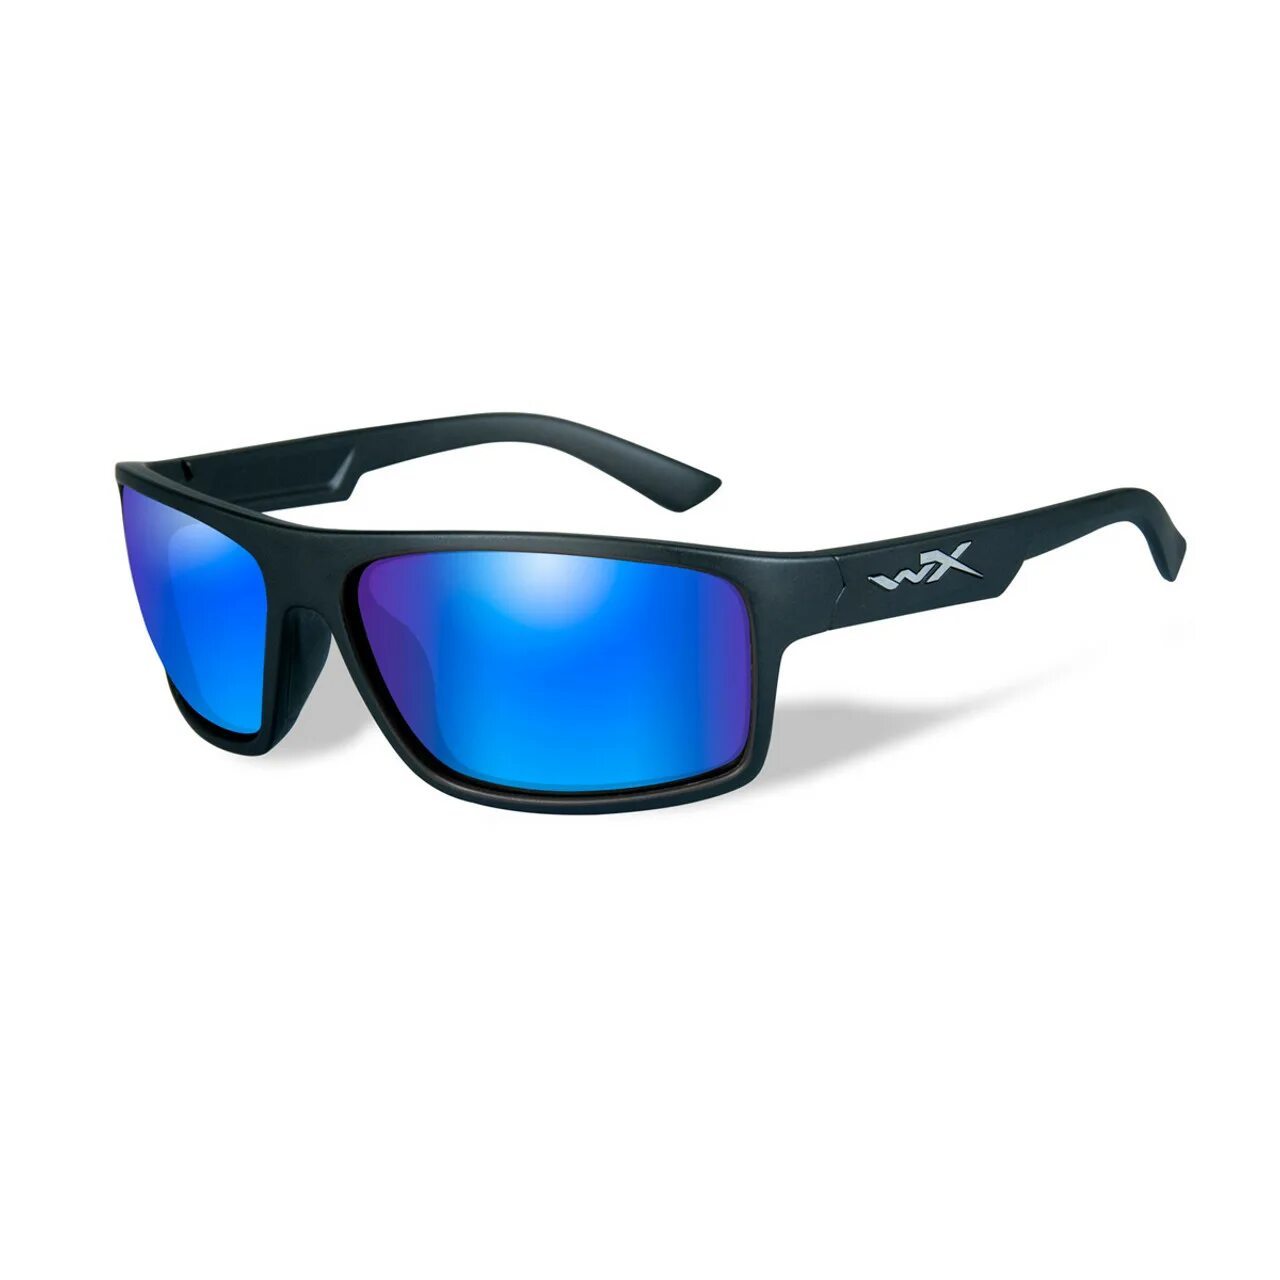 Поляризационные очки озон. Очки Savage Gear 1 Polarized Sunglasses Blue Mirror. Очки защитные Wiley x WX Gravity (frame: Crystal Black, Lens: Polarized - Blue Mirror). Cebe женские спортивные очки. Blue Lens Sunglasses.